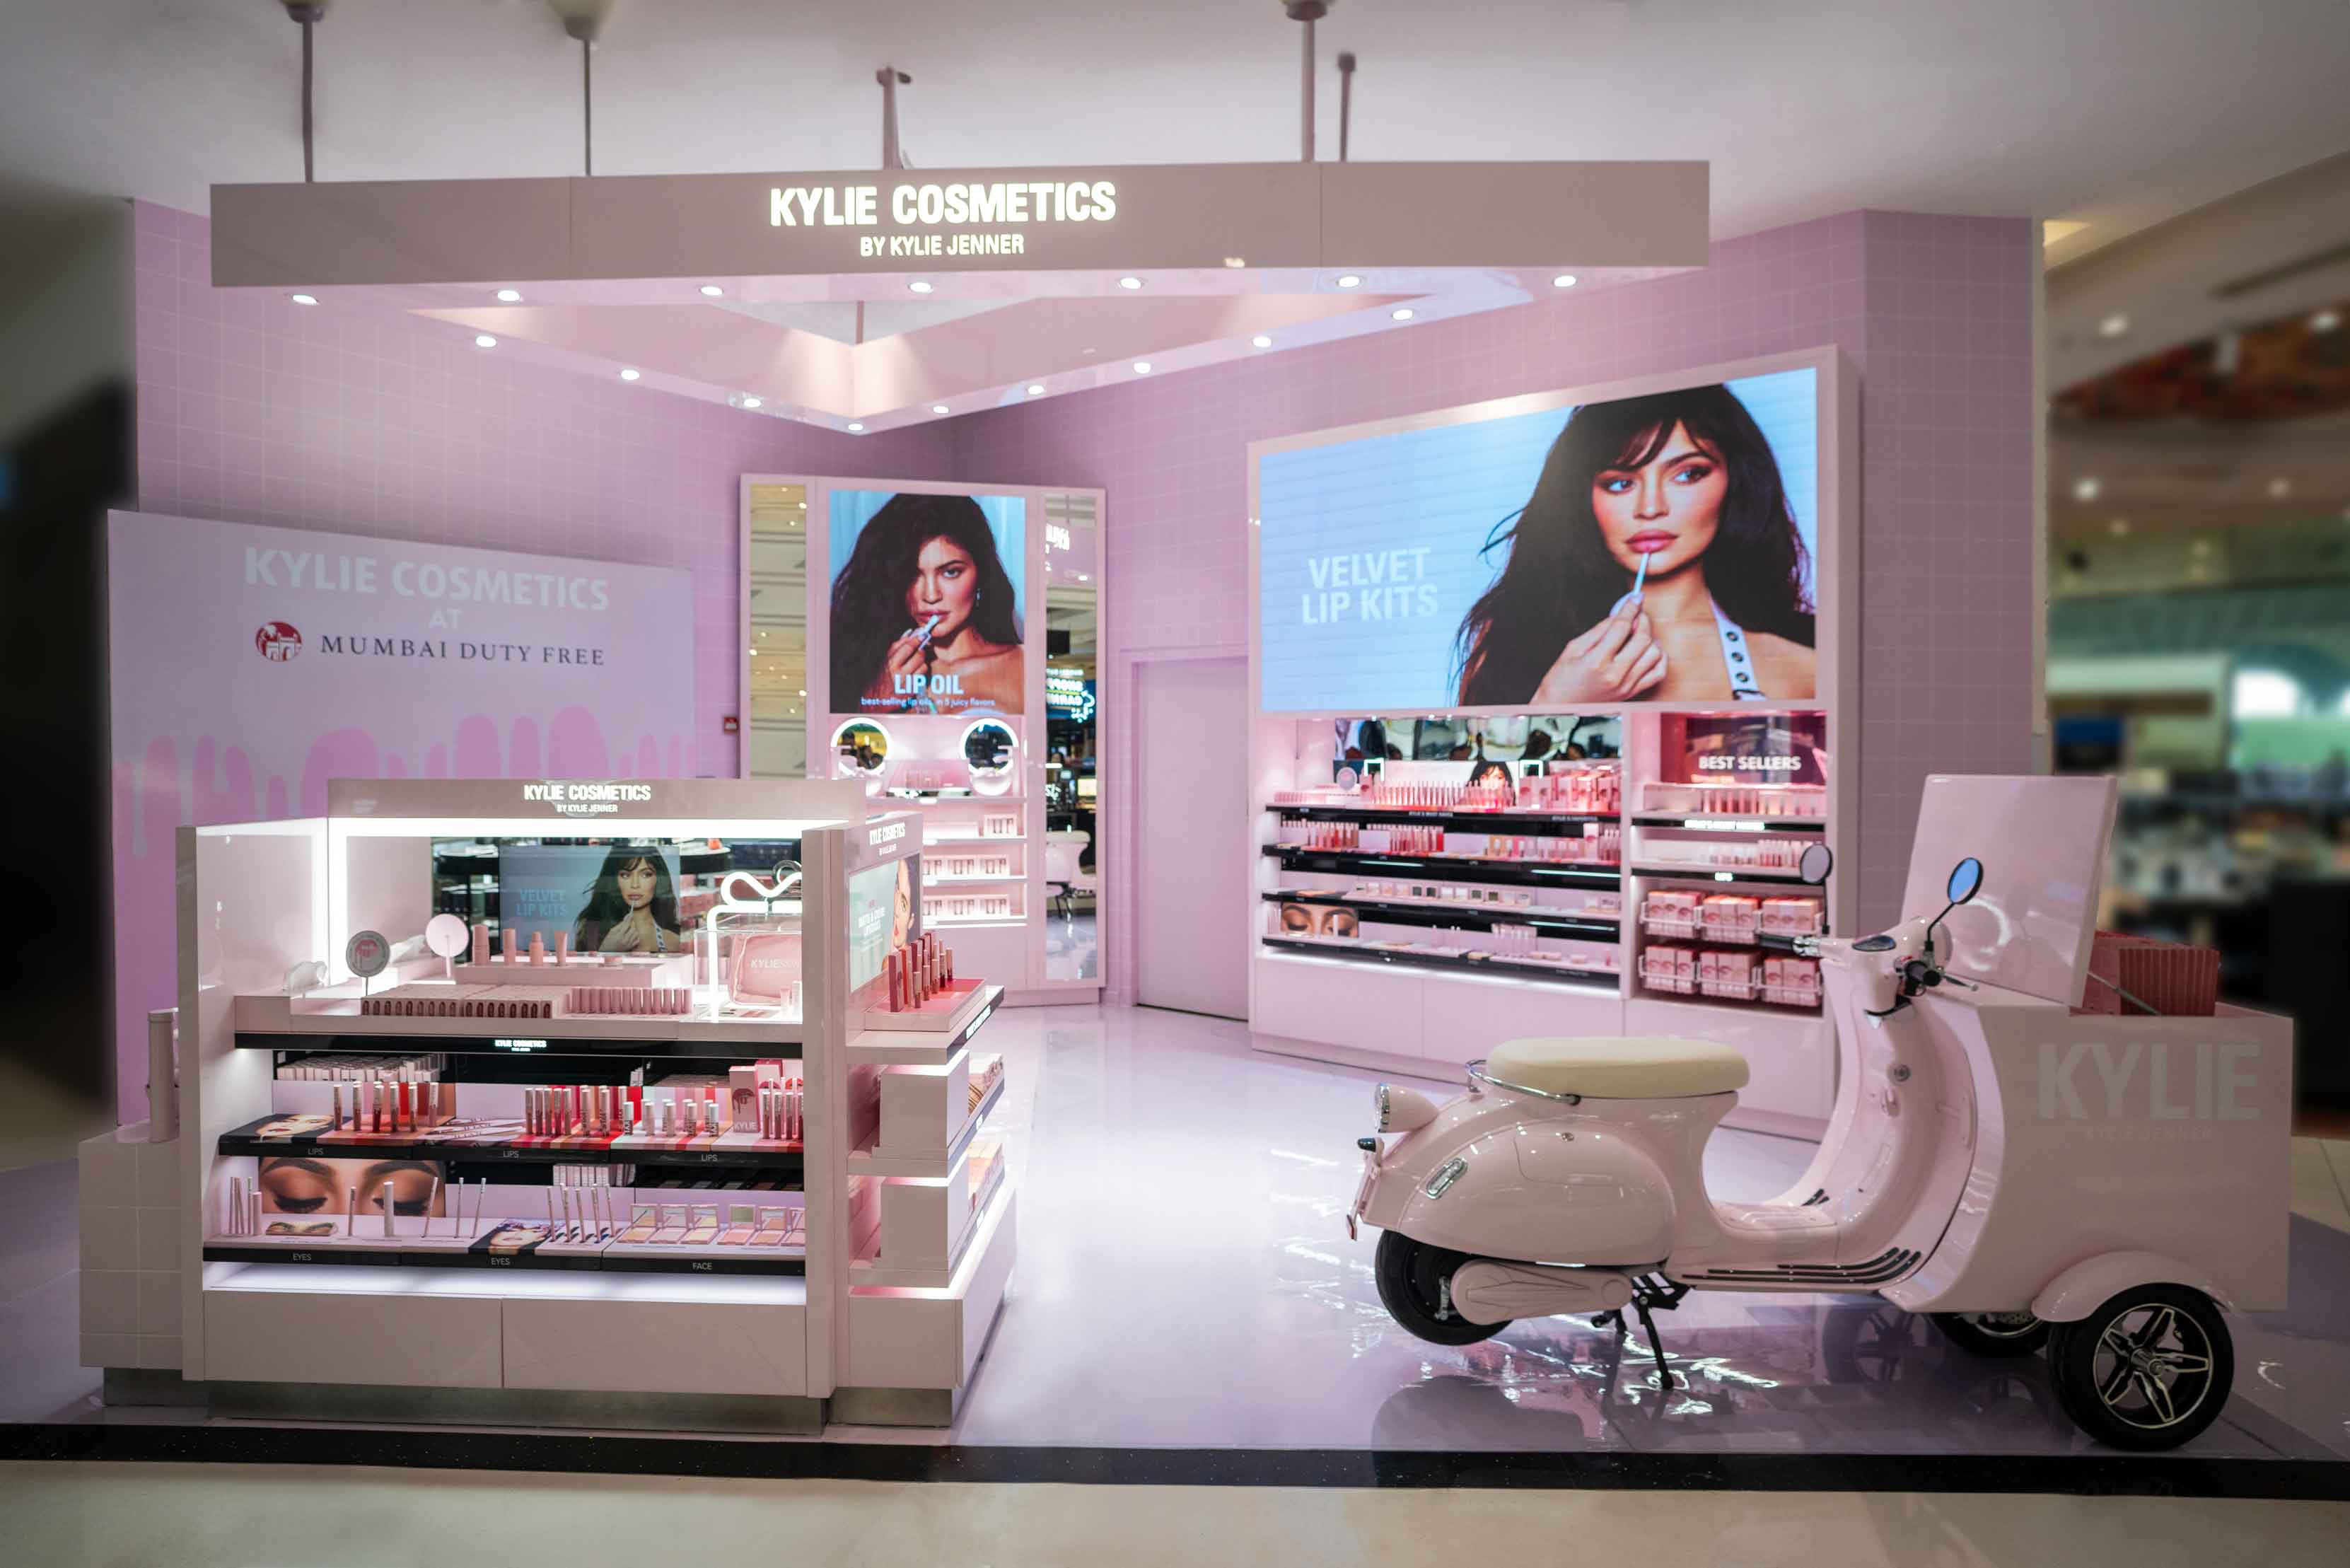 Kylie cosmetics showcase at travel retail